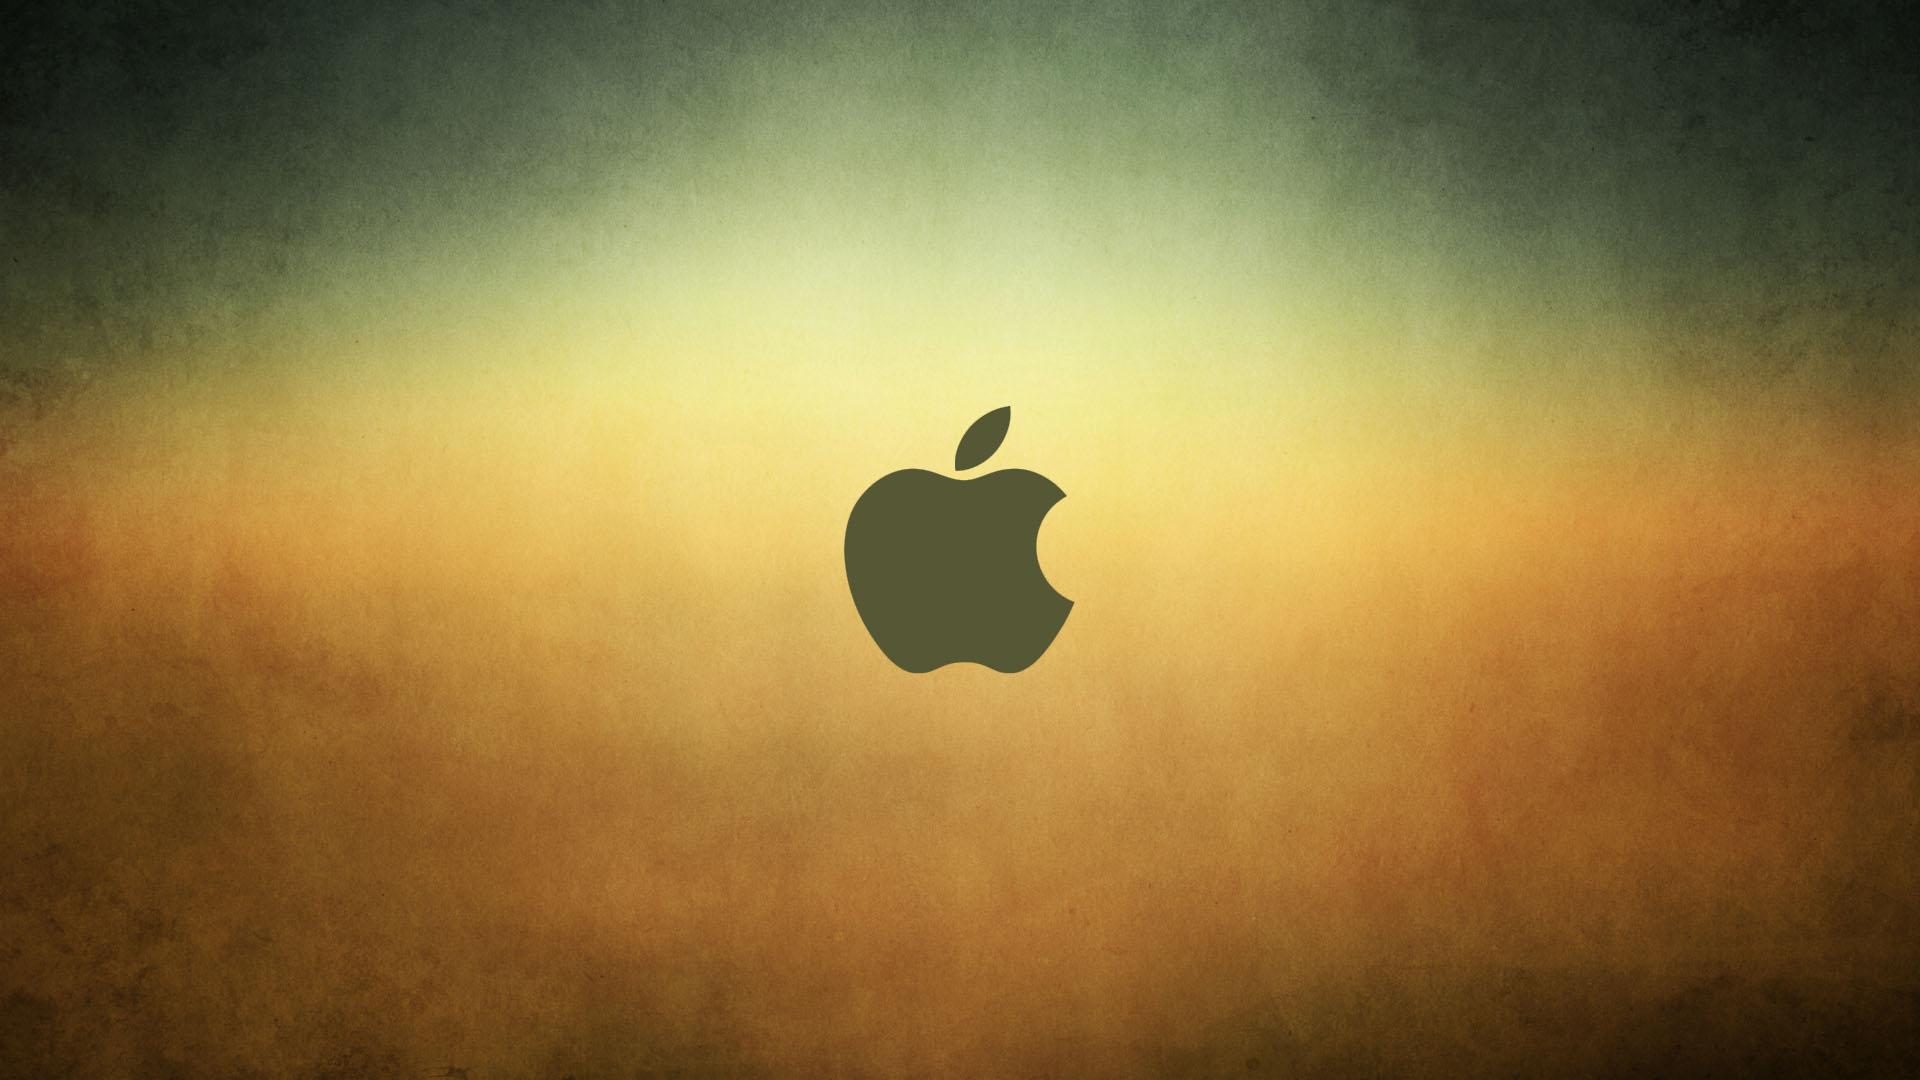 1920 x 1080 · jpeg - Wallpaper gratis del logo de Apple, en fondo amarillo, en HD.